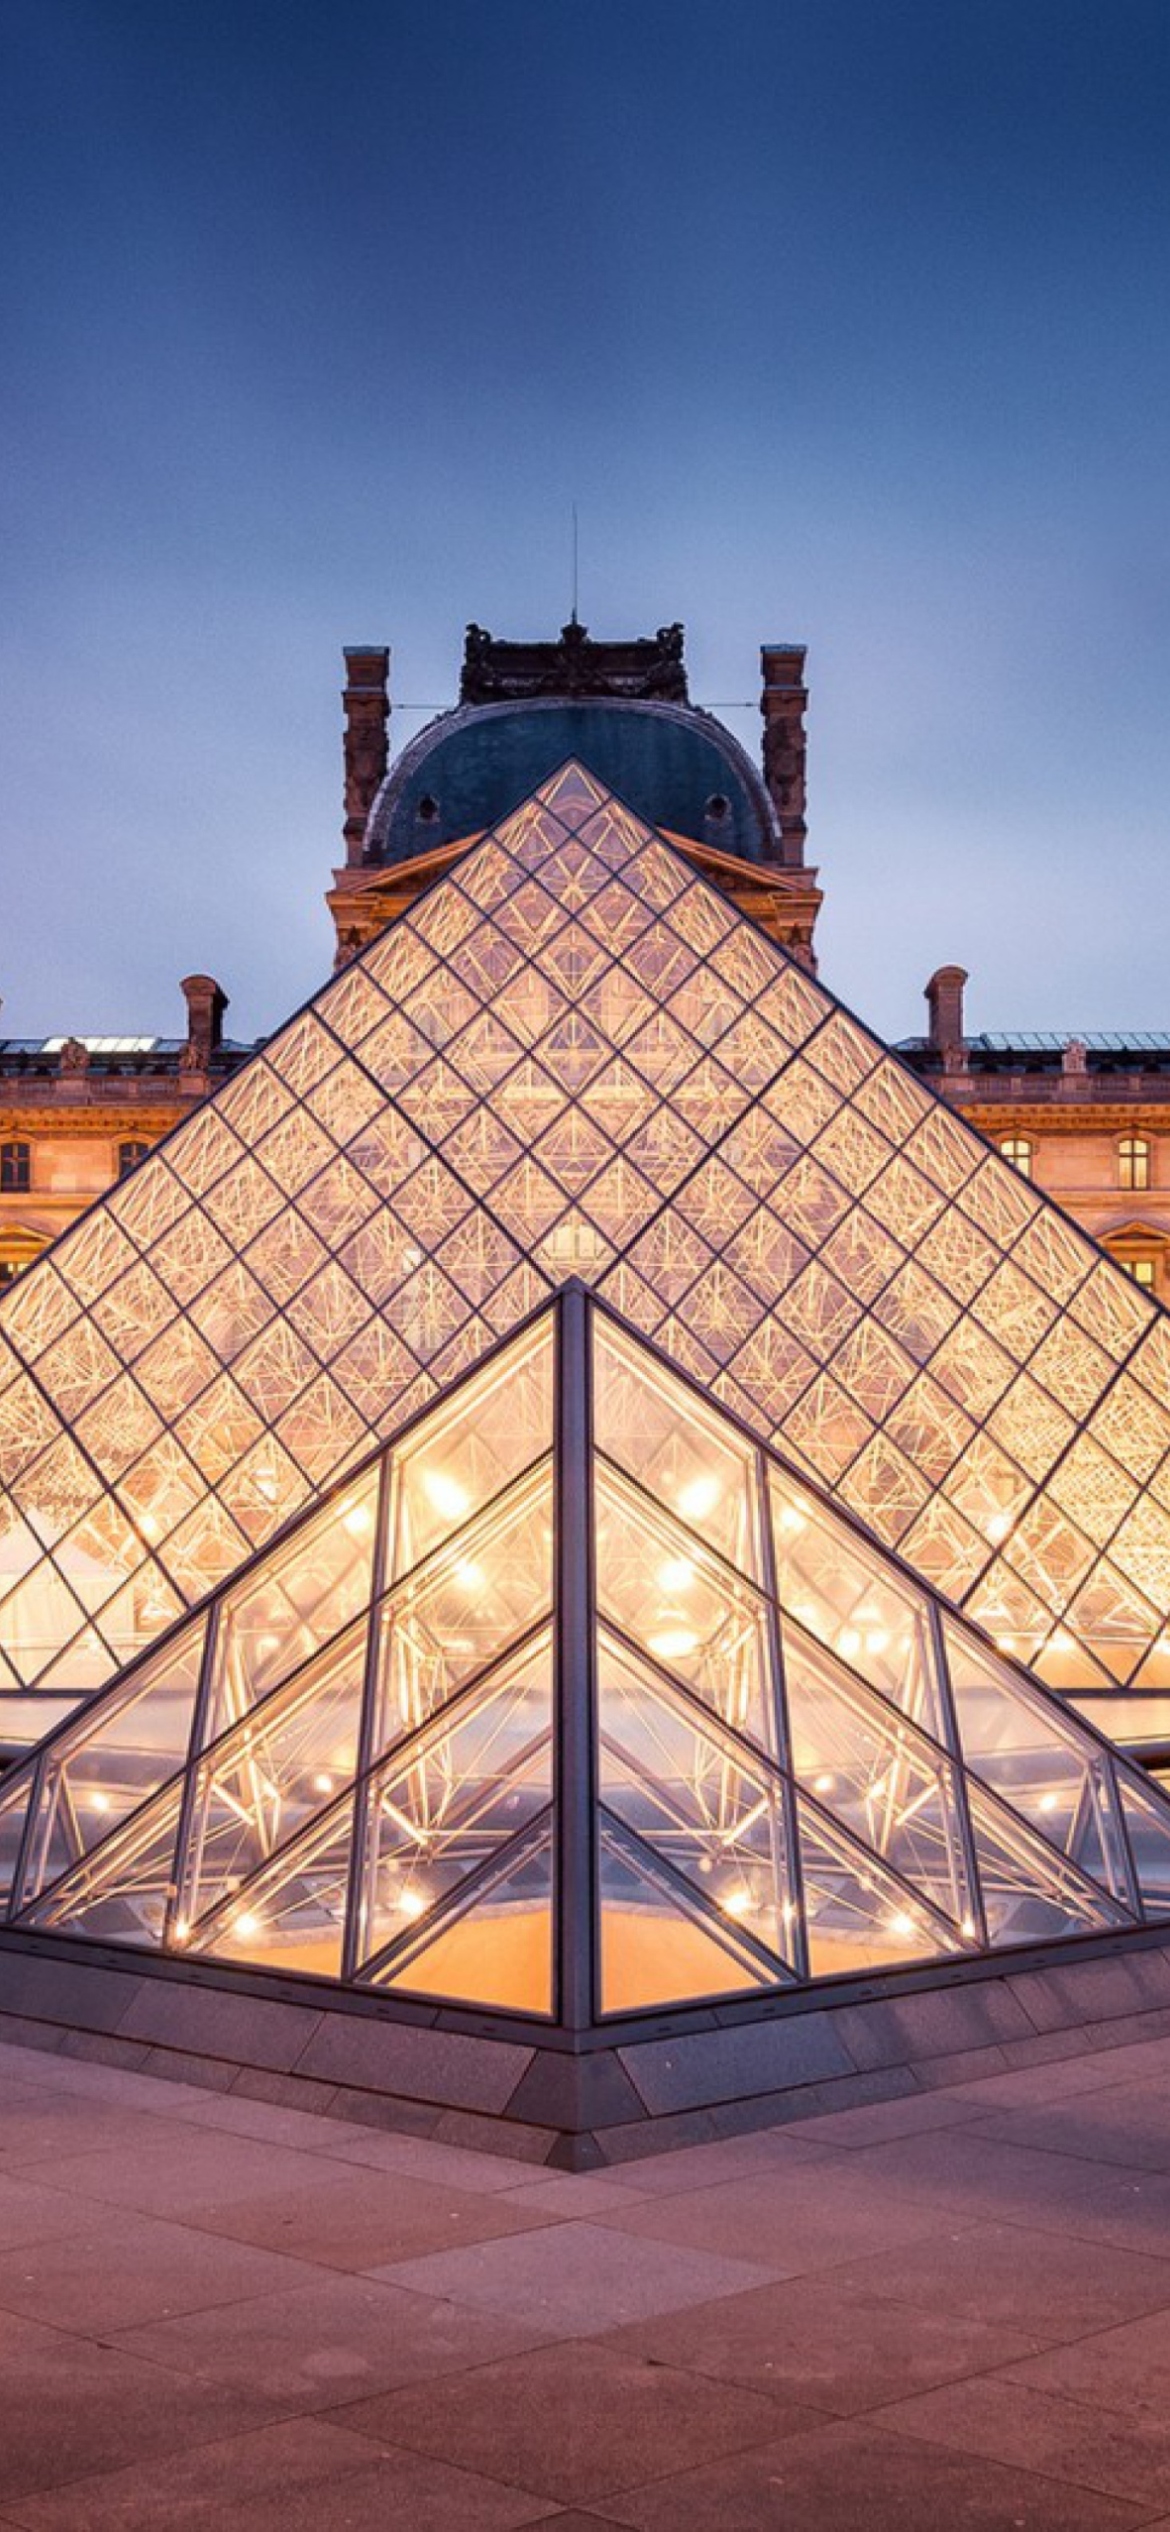 Fondo de pantalla Louvre Paris 1170x2532